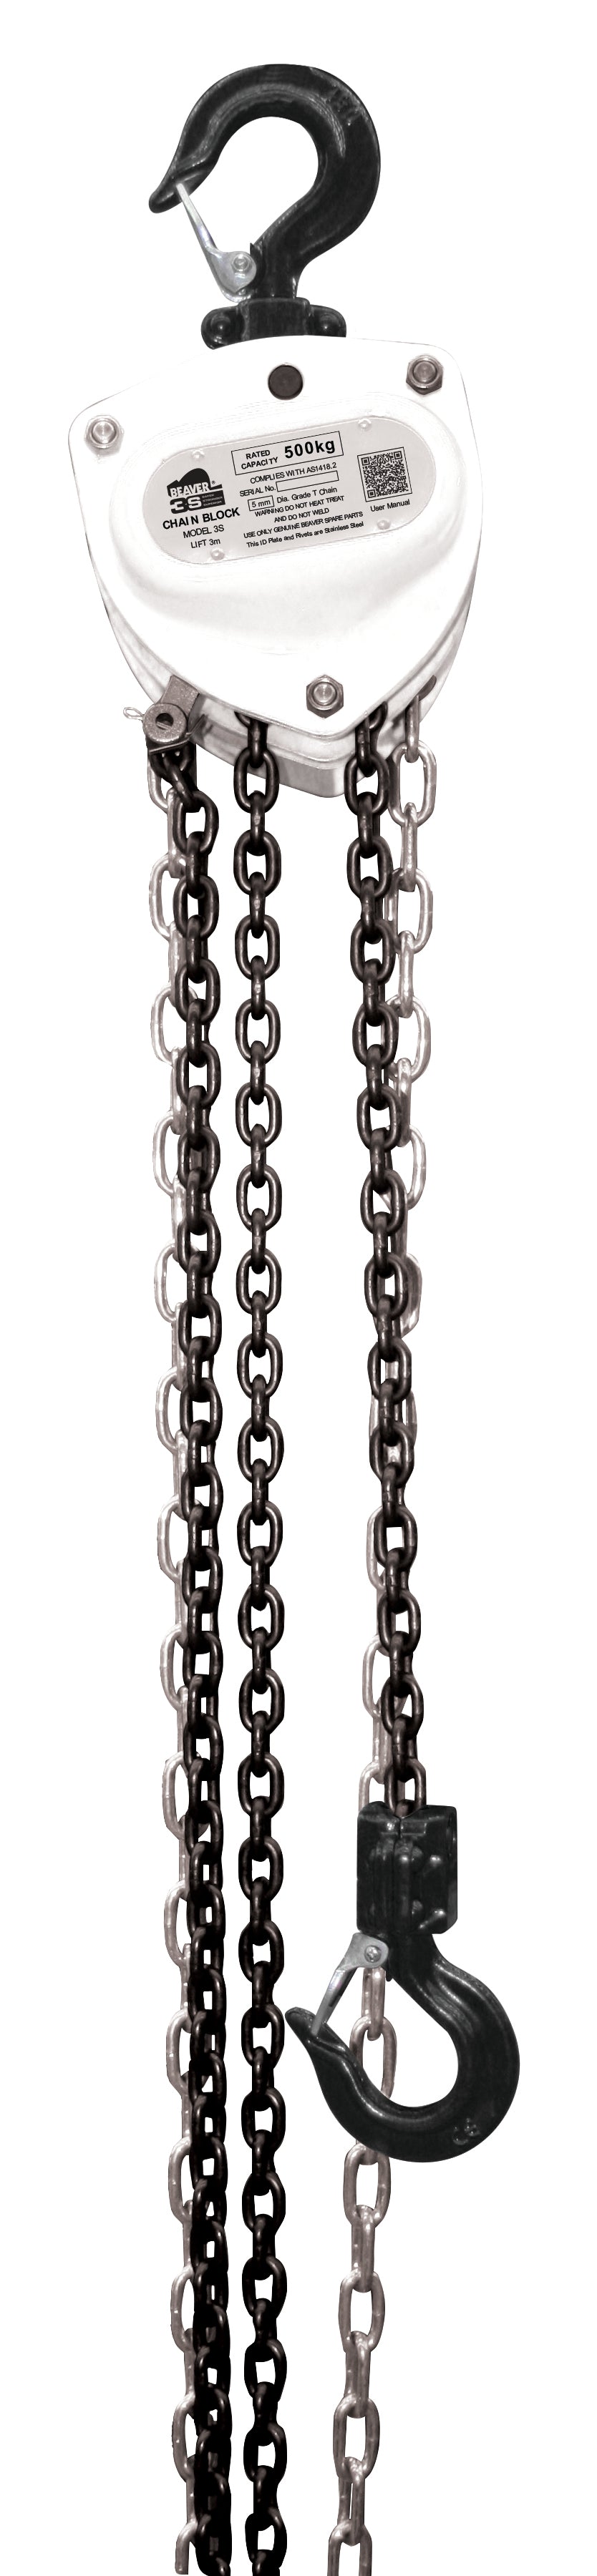 Industrial Manual Chain Block